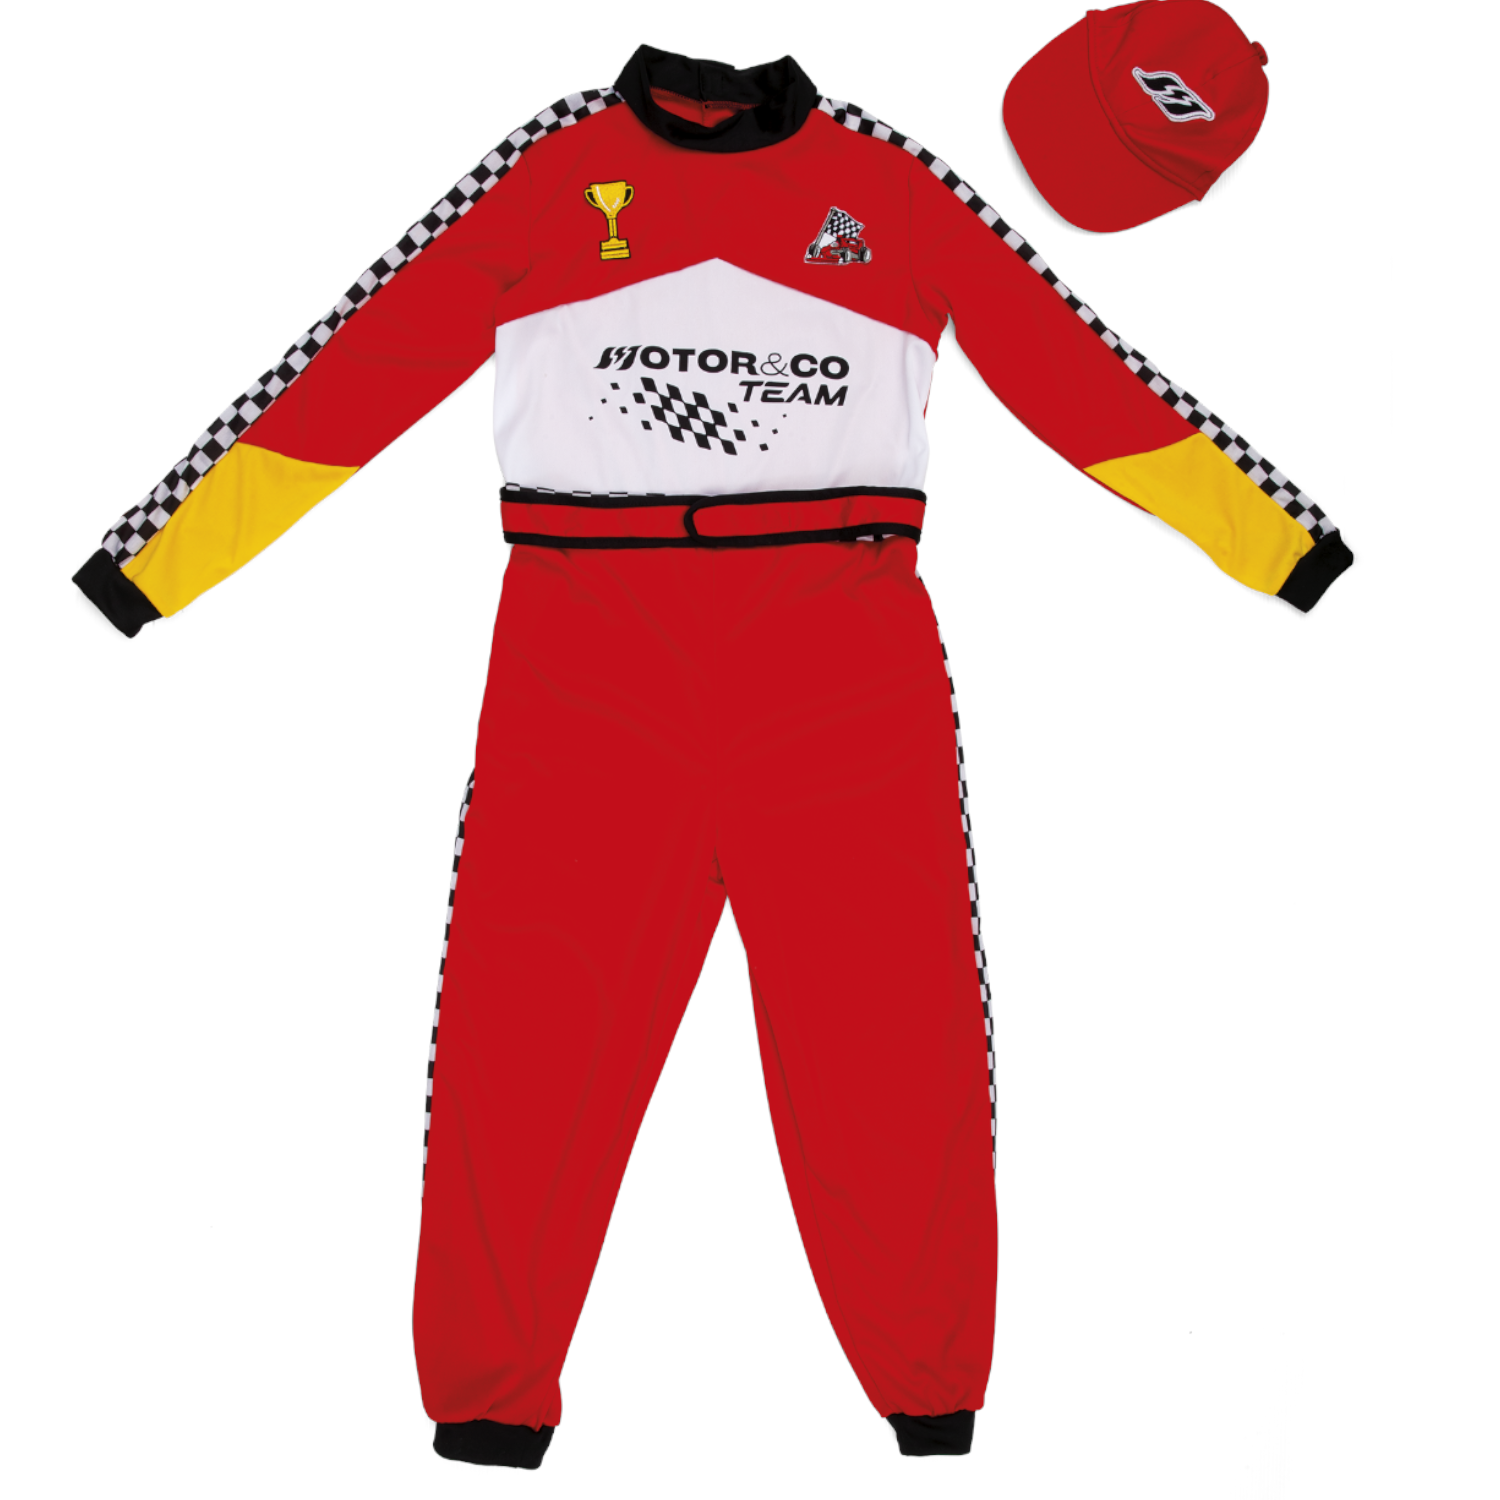 Costume da pilota formula 1 disponibile in diverse taglie - 